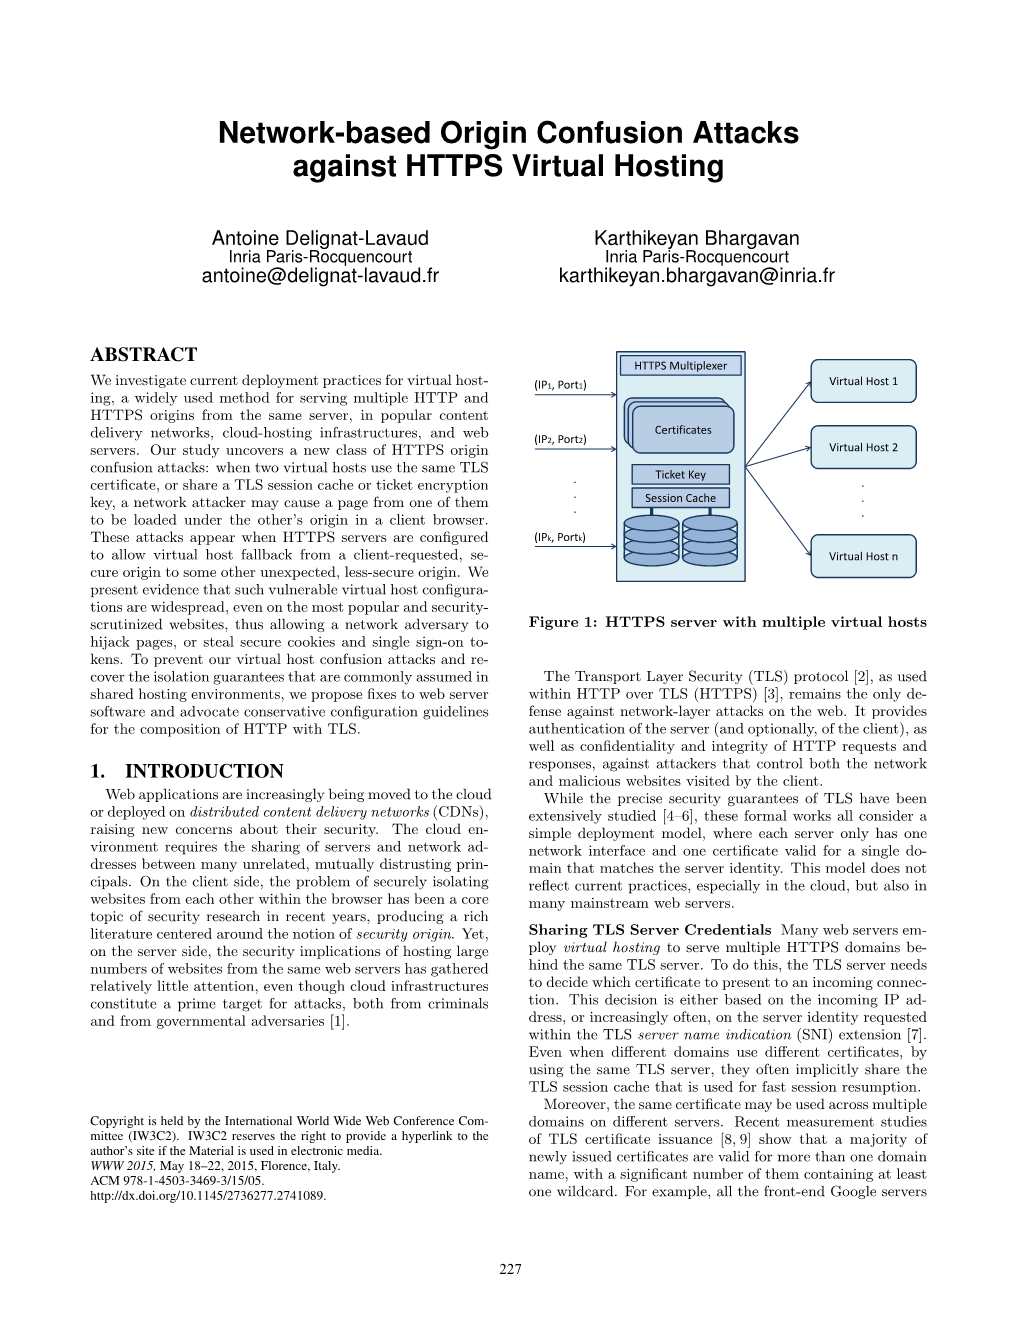 Network-Based Origin Confusion Attacks Against HTTPS Virtual Hosting